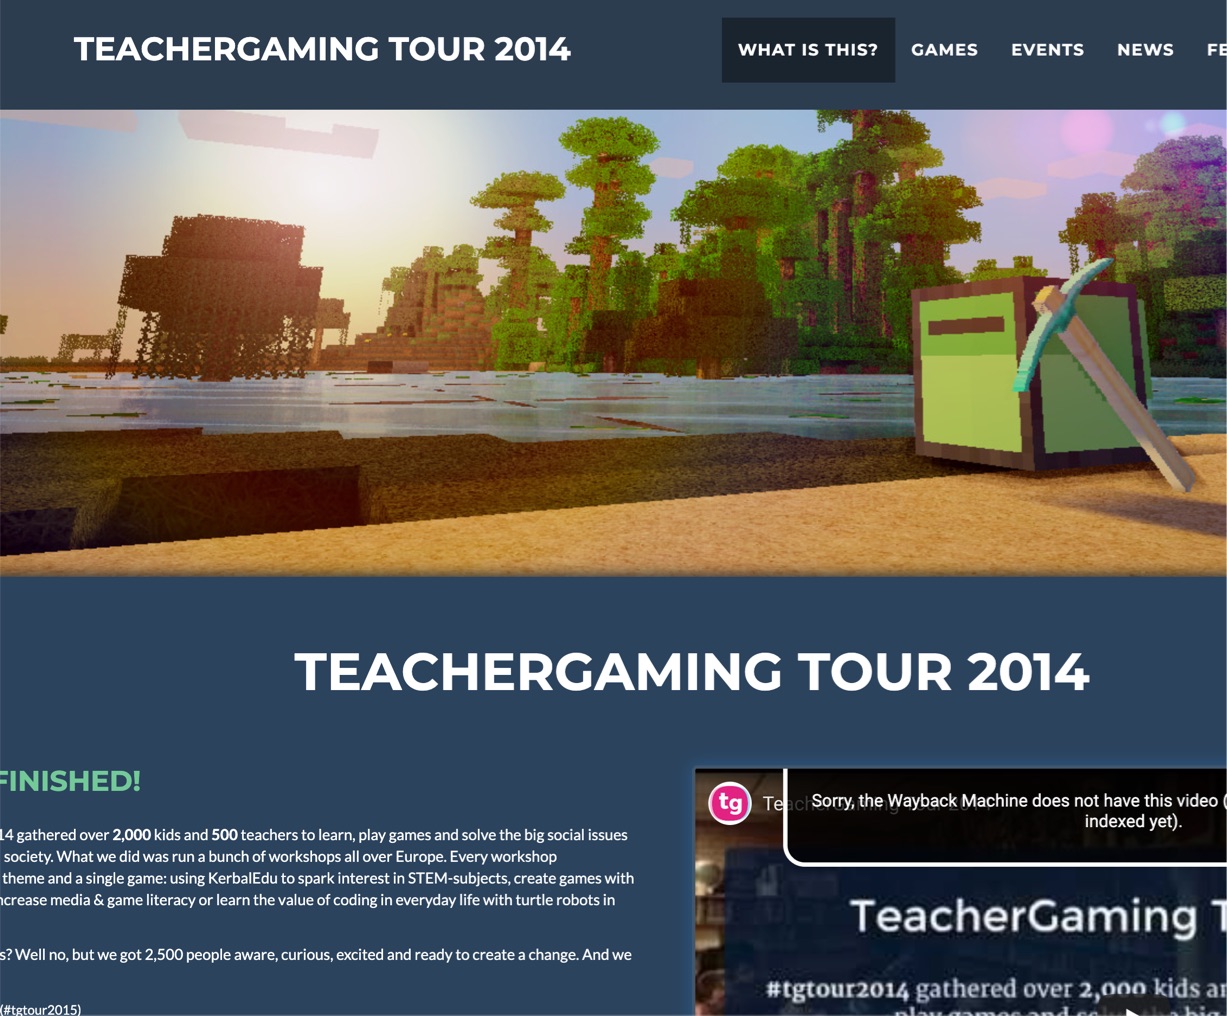 TeacherGaming Tour 2014 Website Cover Image